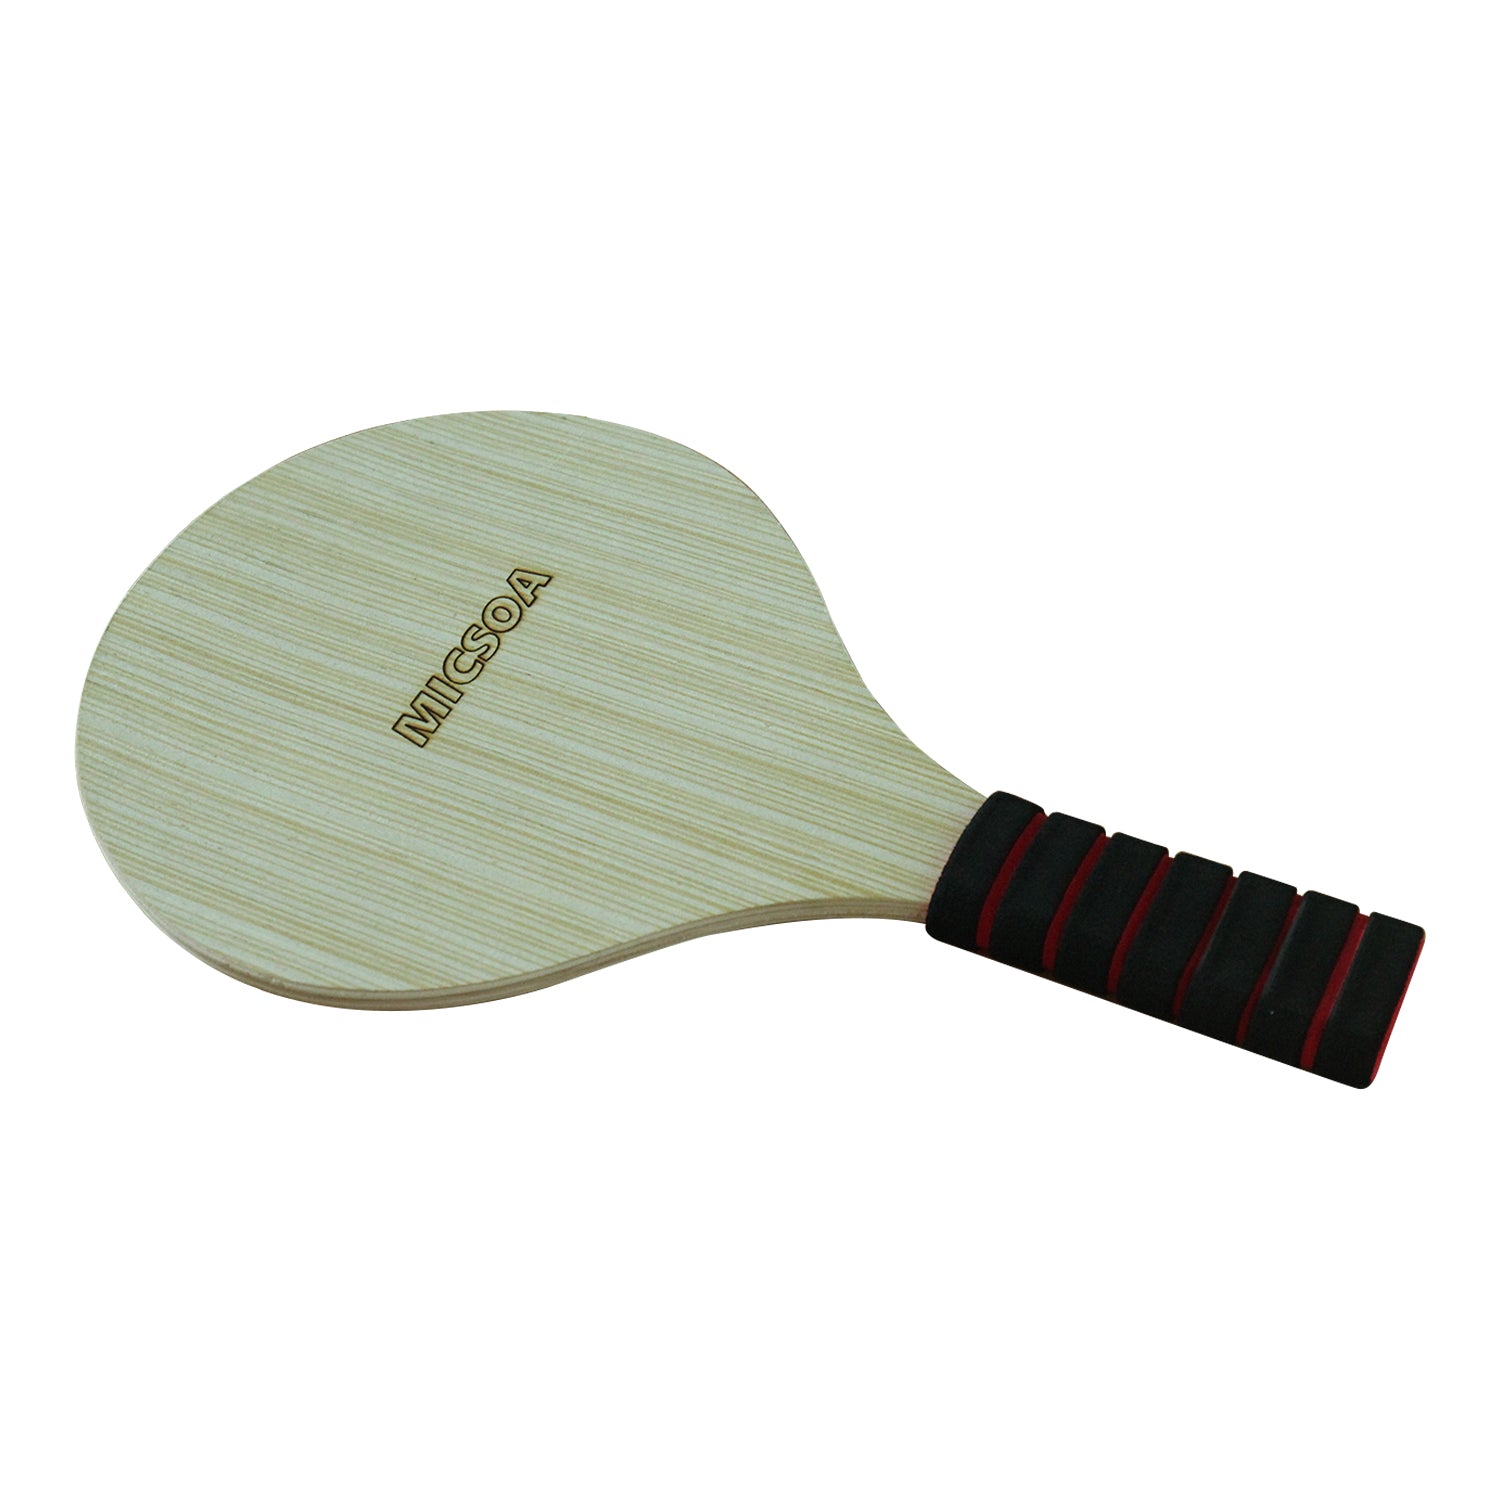 MICSOA Wooden Paddle Balls